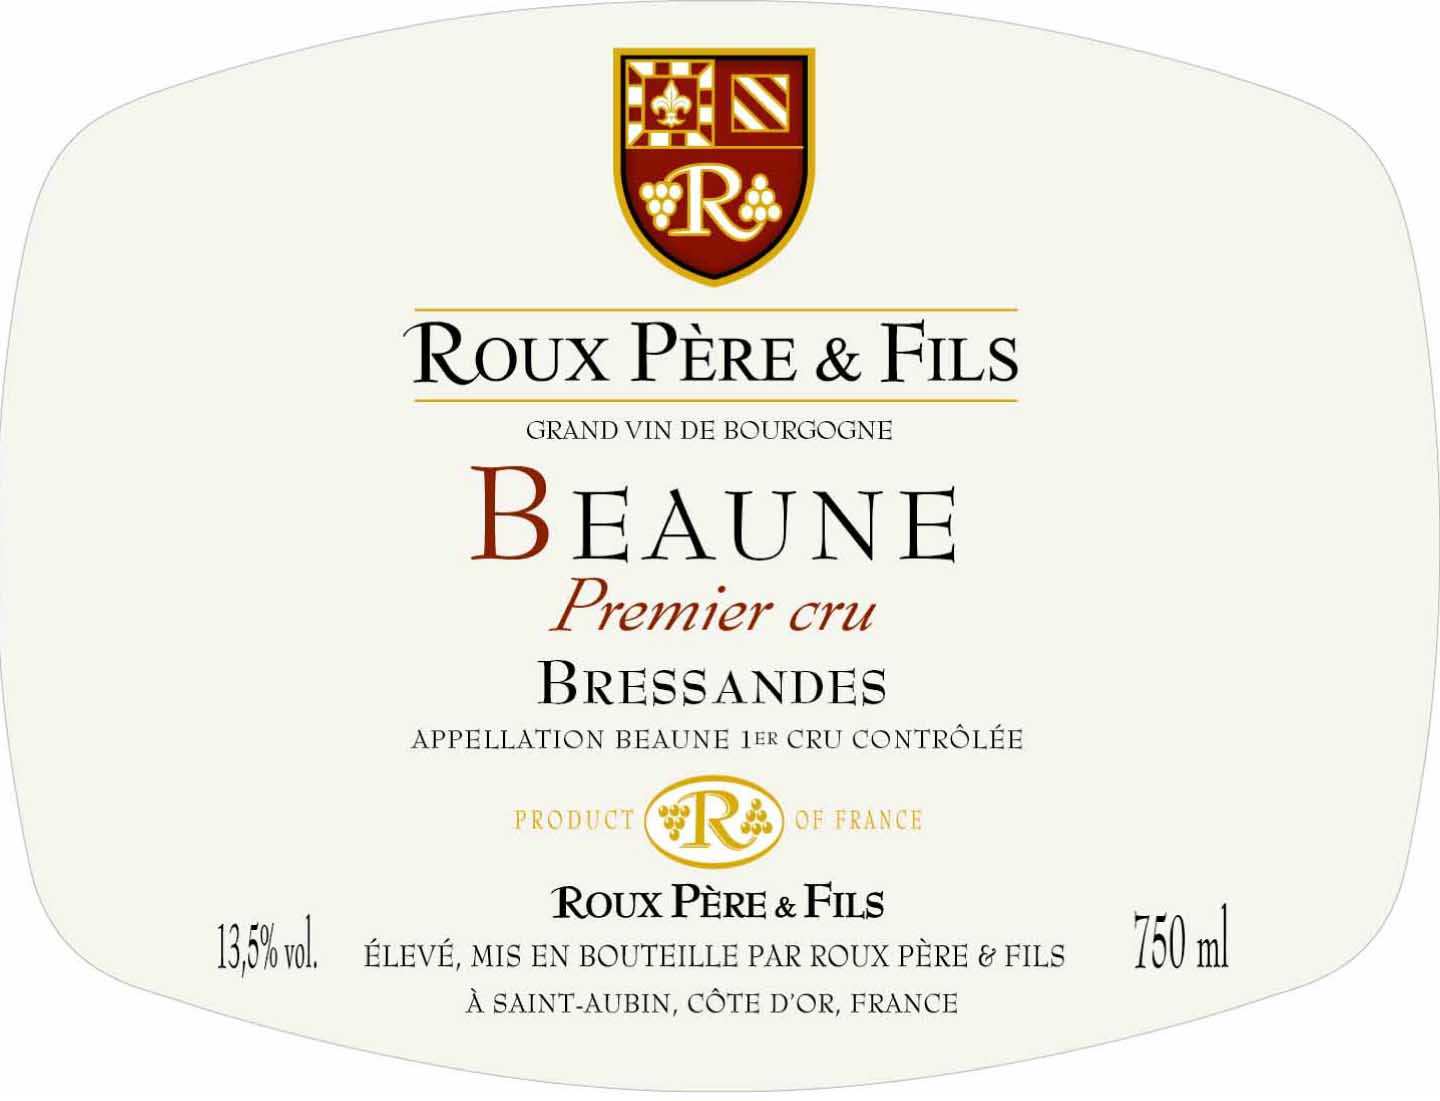 Famille Roux - Beaune 1er Crus - Bressandes label